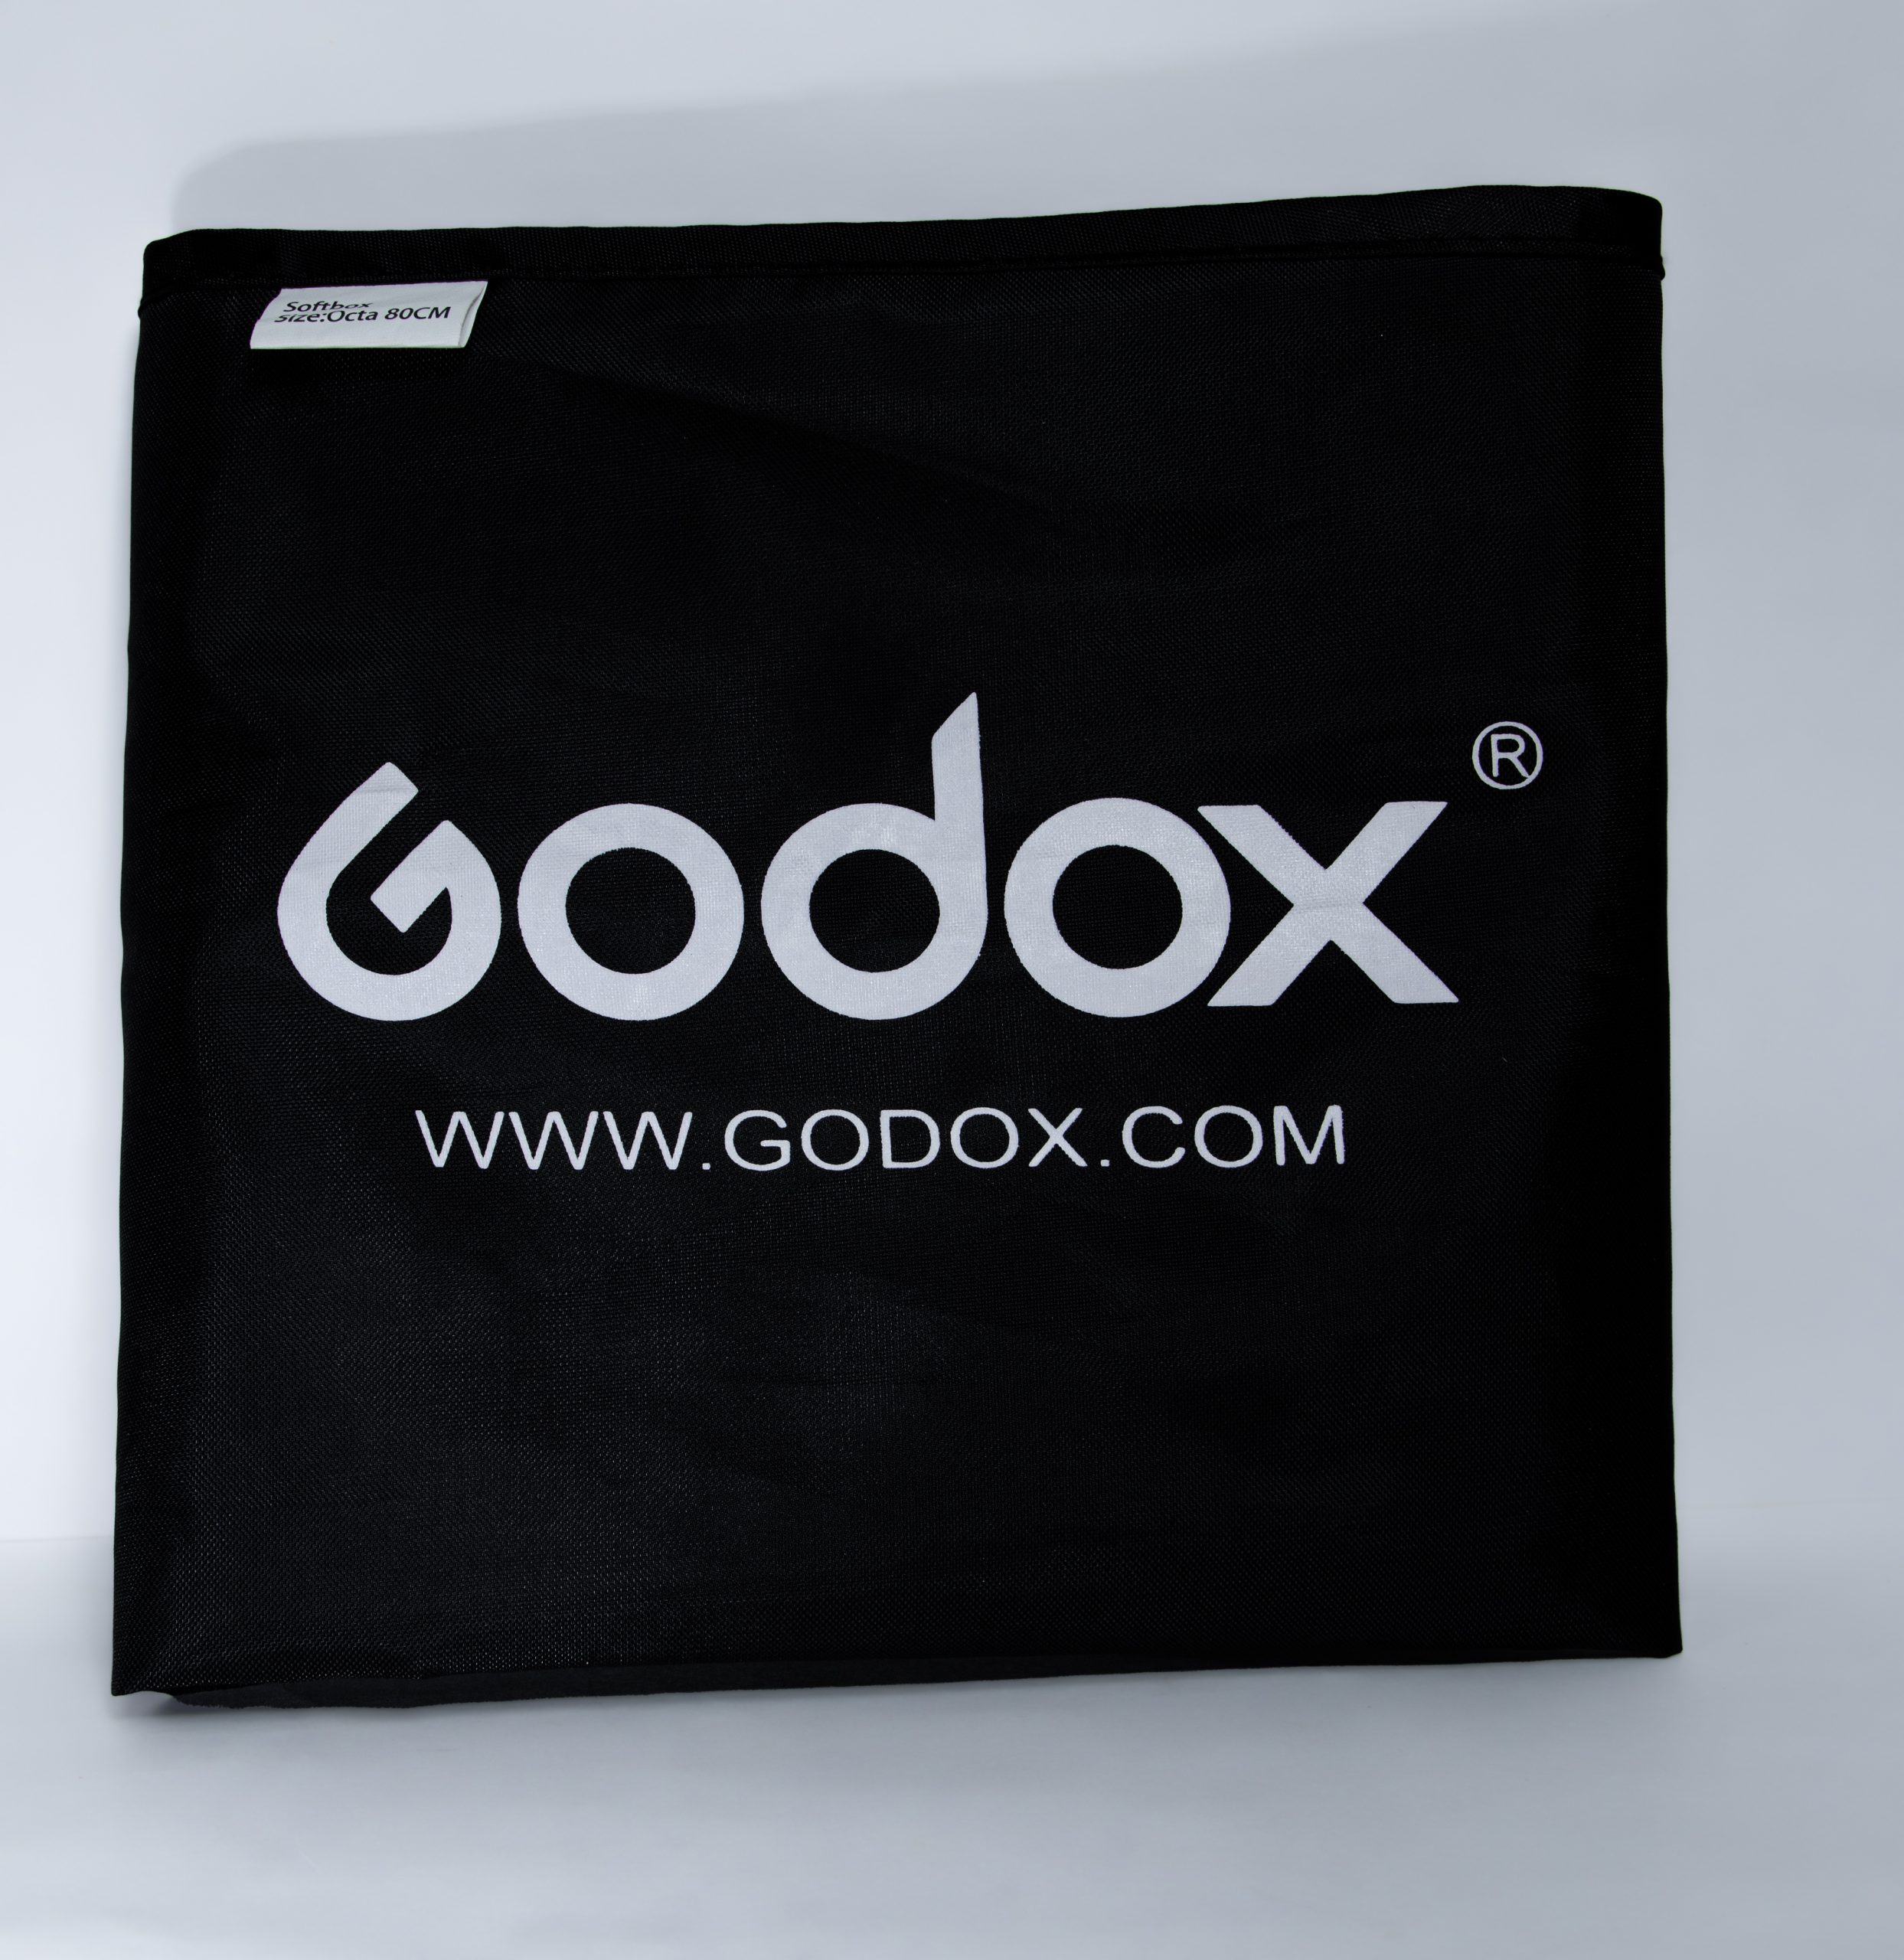 Godox company bag